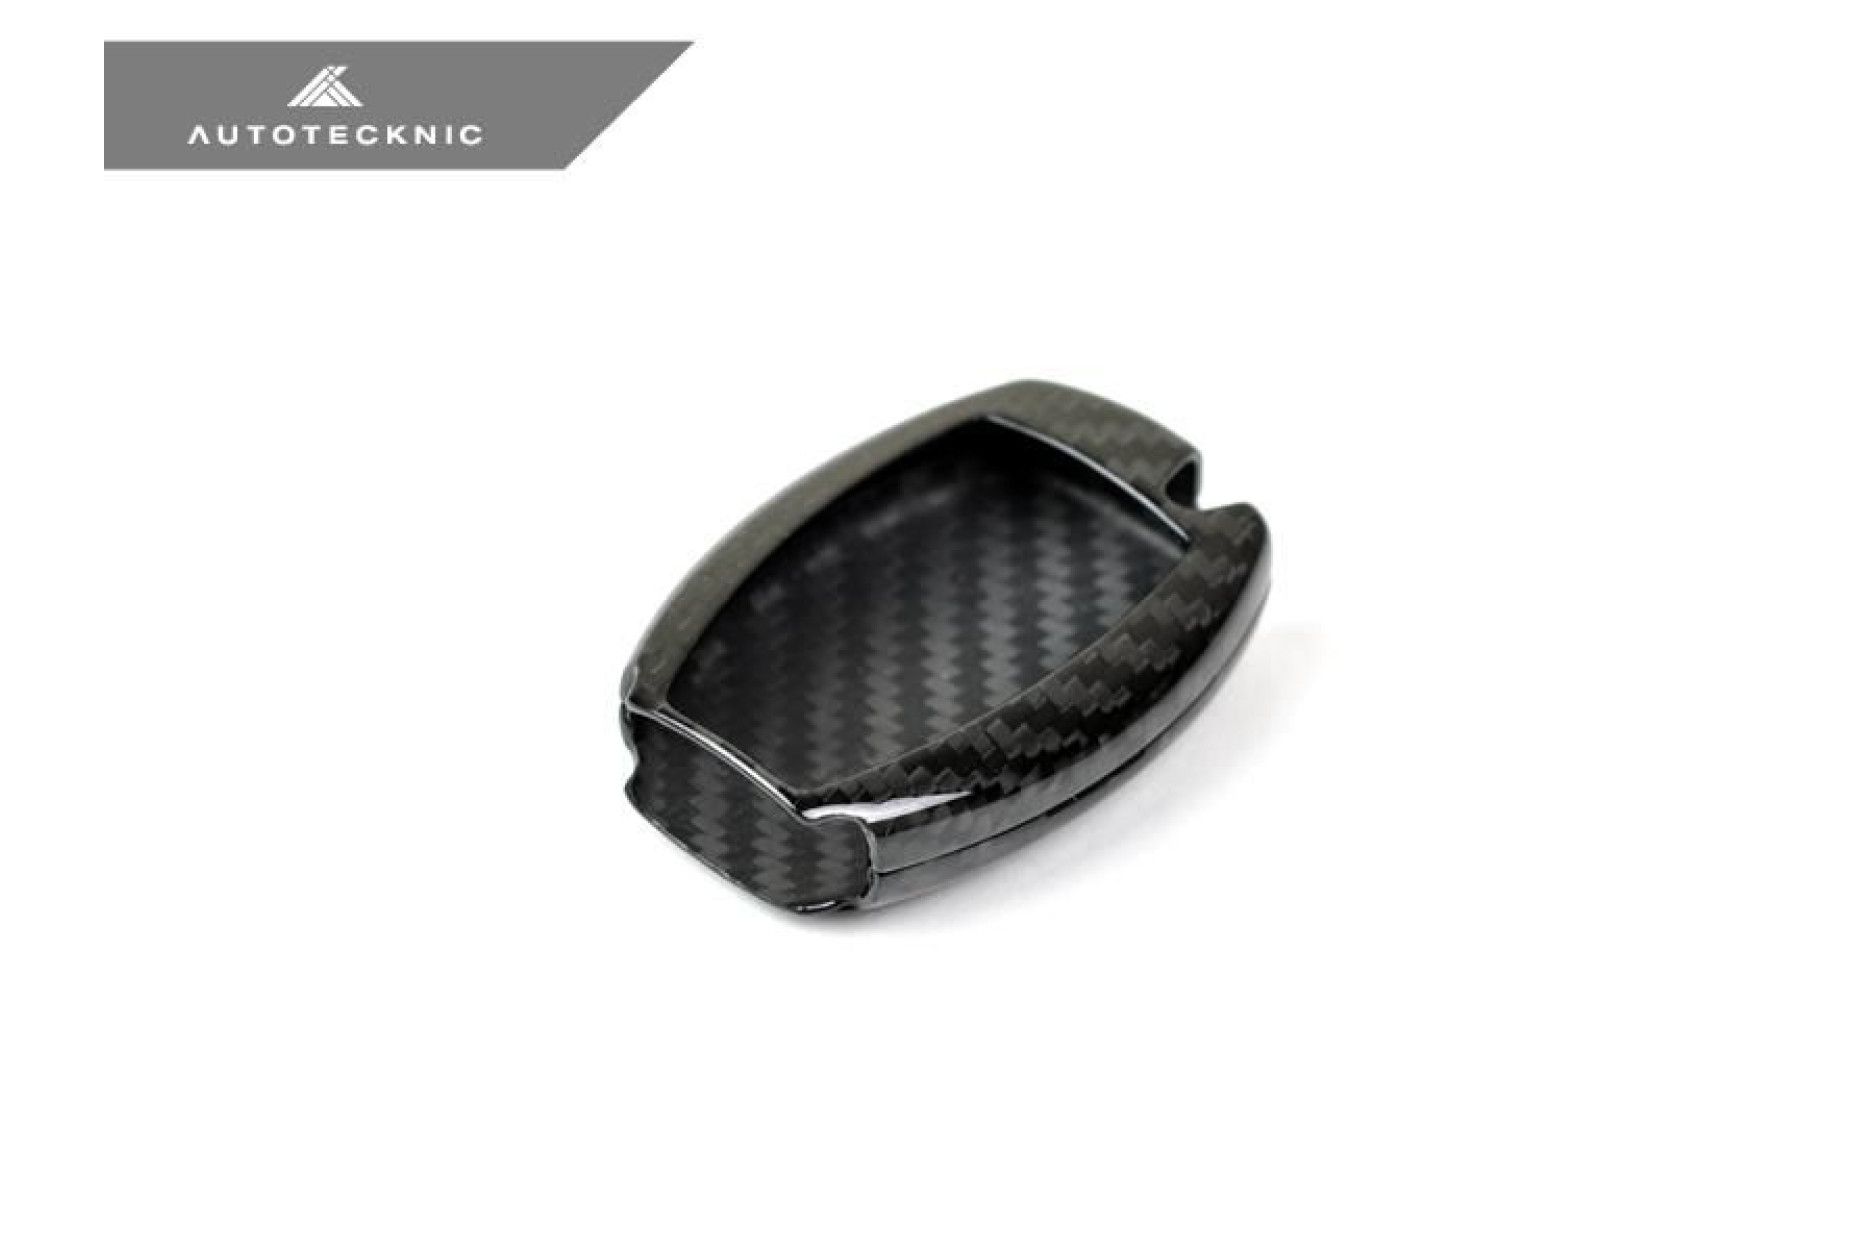 Echt Carbon Auto Schlüssel Cover für Mercedes E S Klasse schwarz